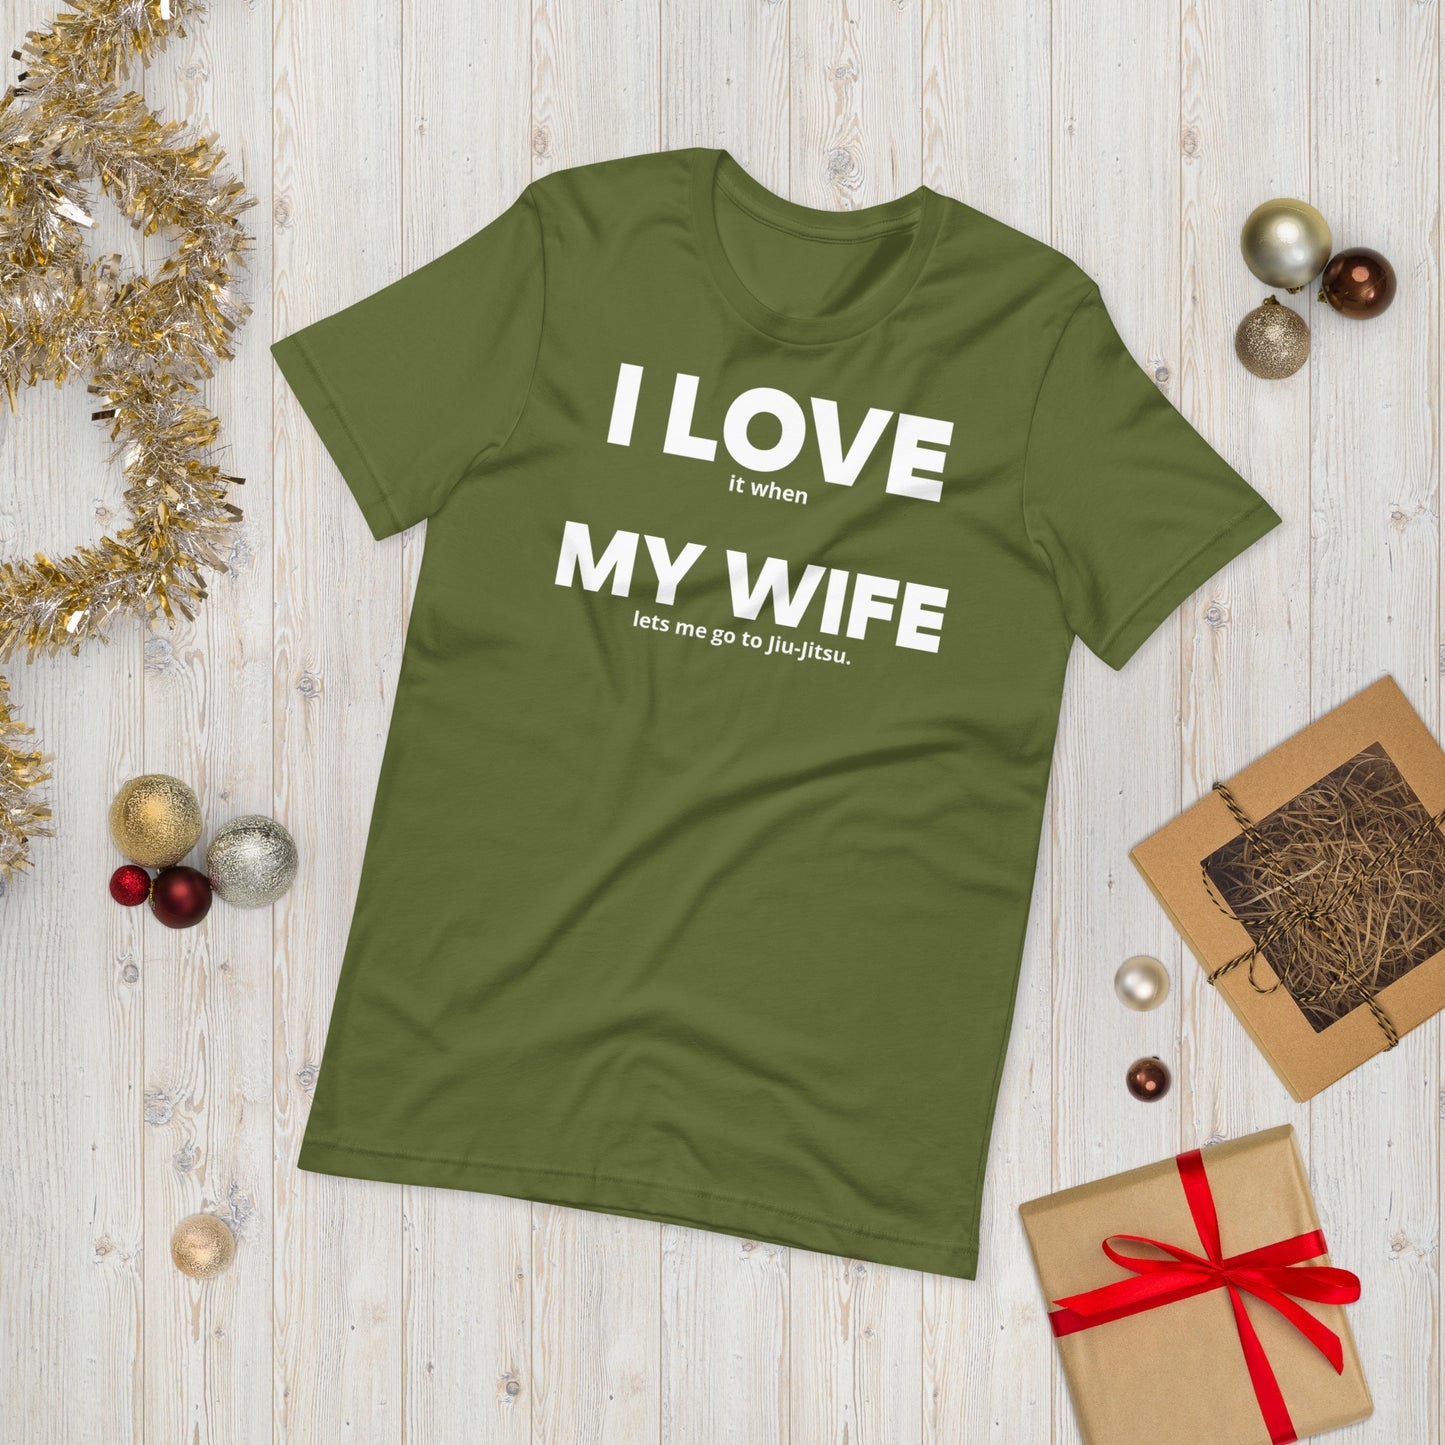 I LOVE MY WIFE  t-shirt